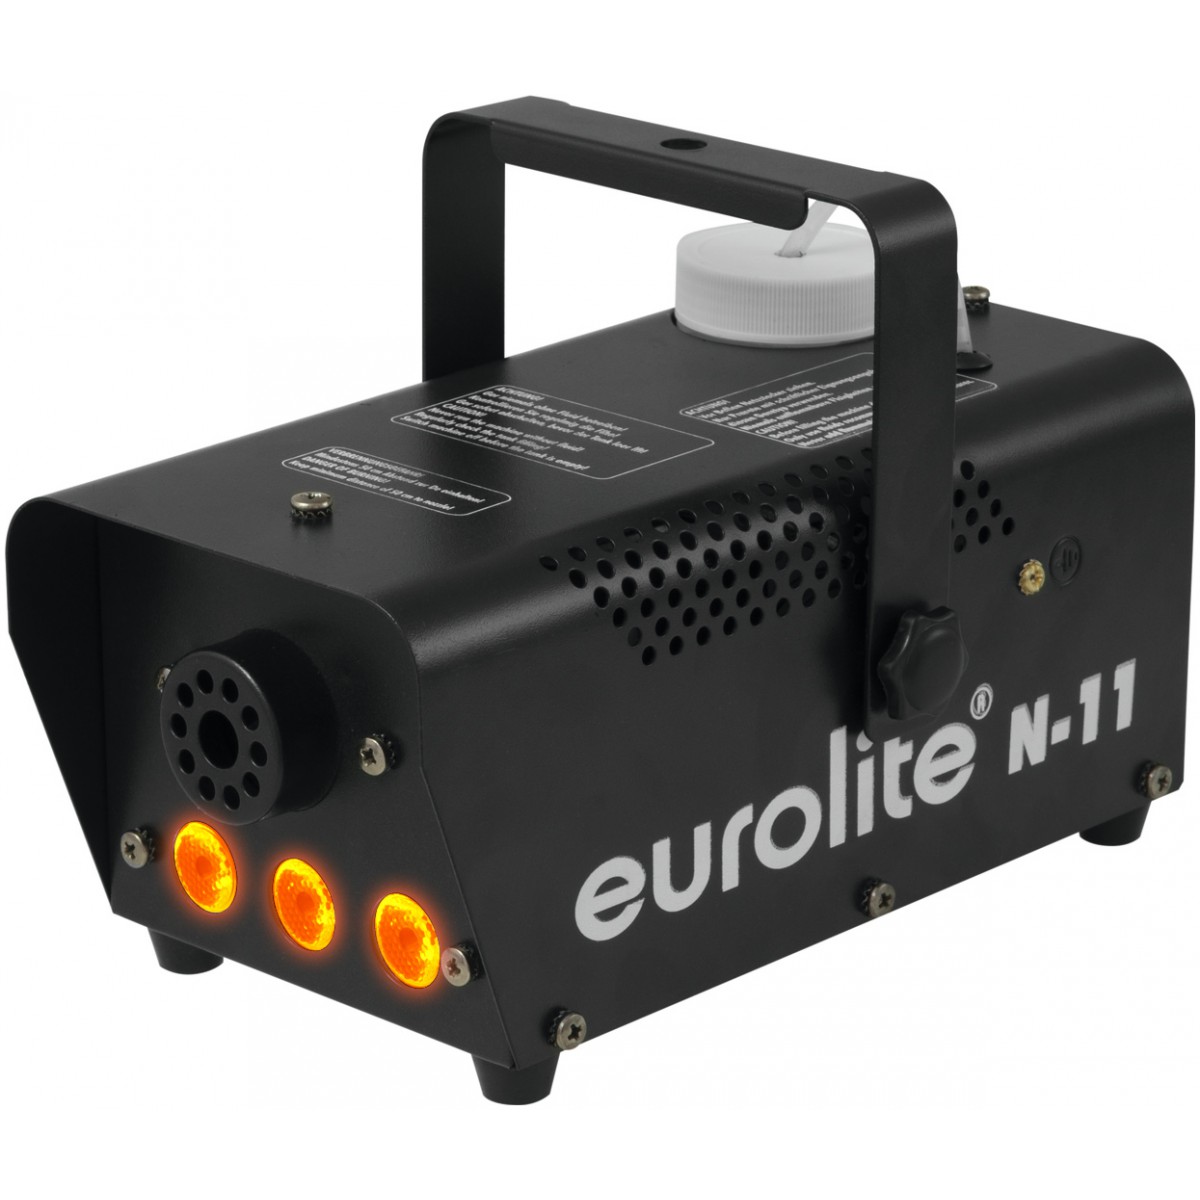 Eurolite N-11 LED výrobník mlhy s oranžovými LED diodami